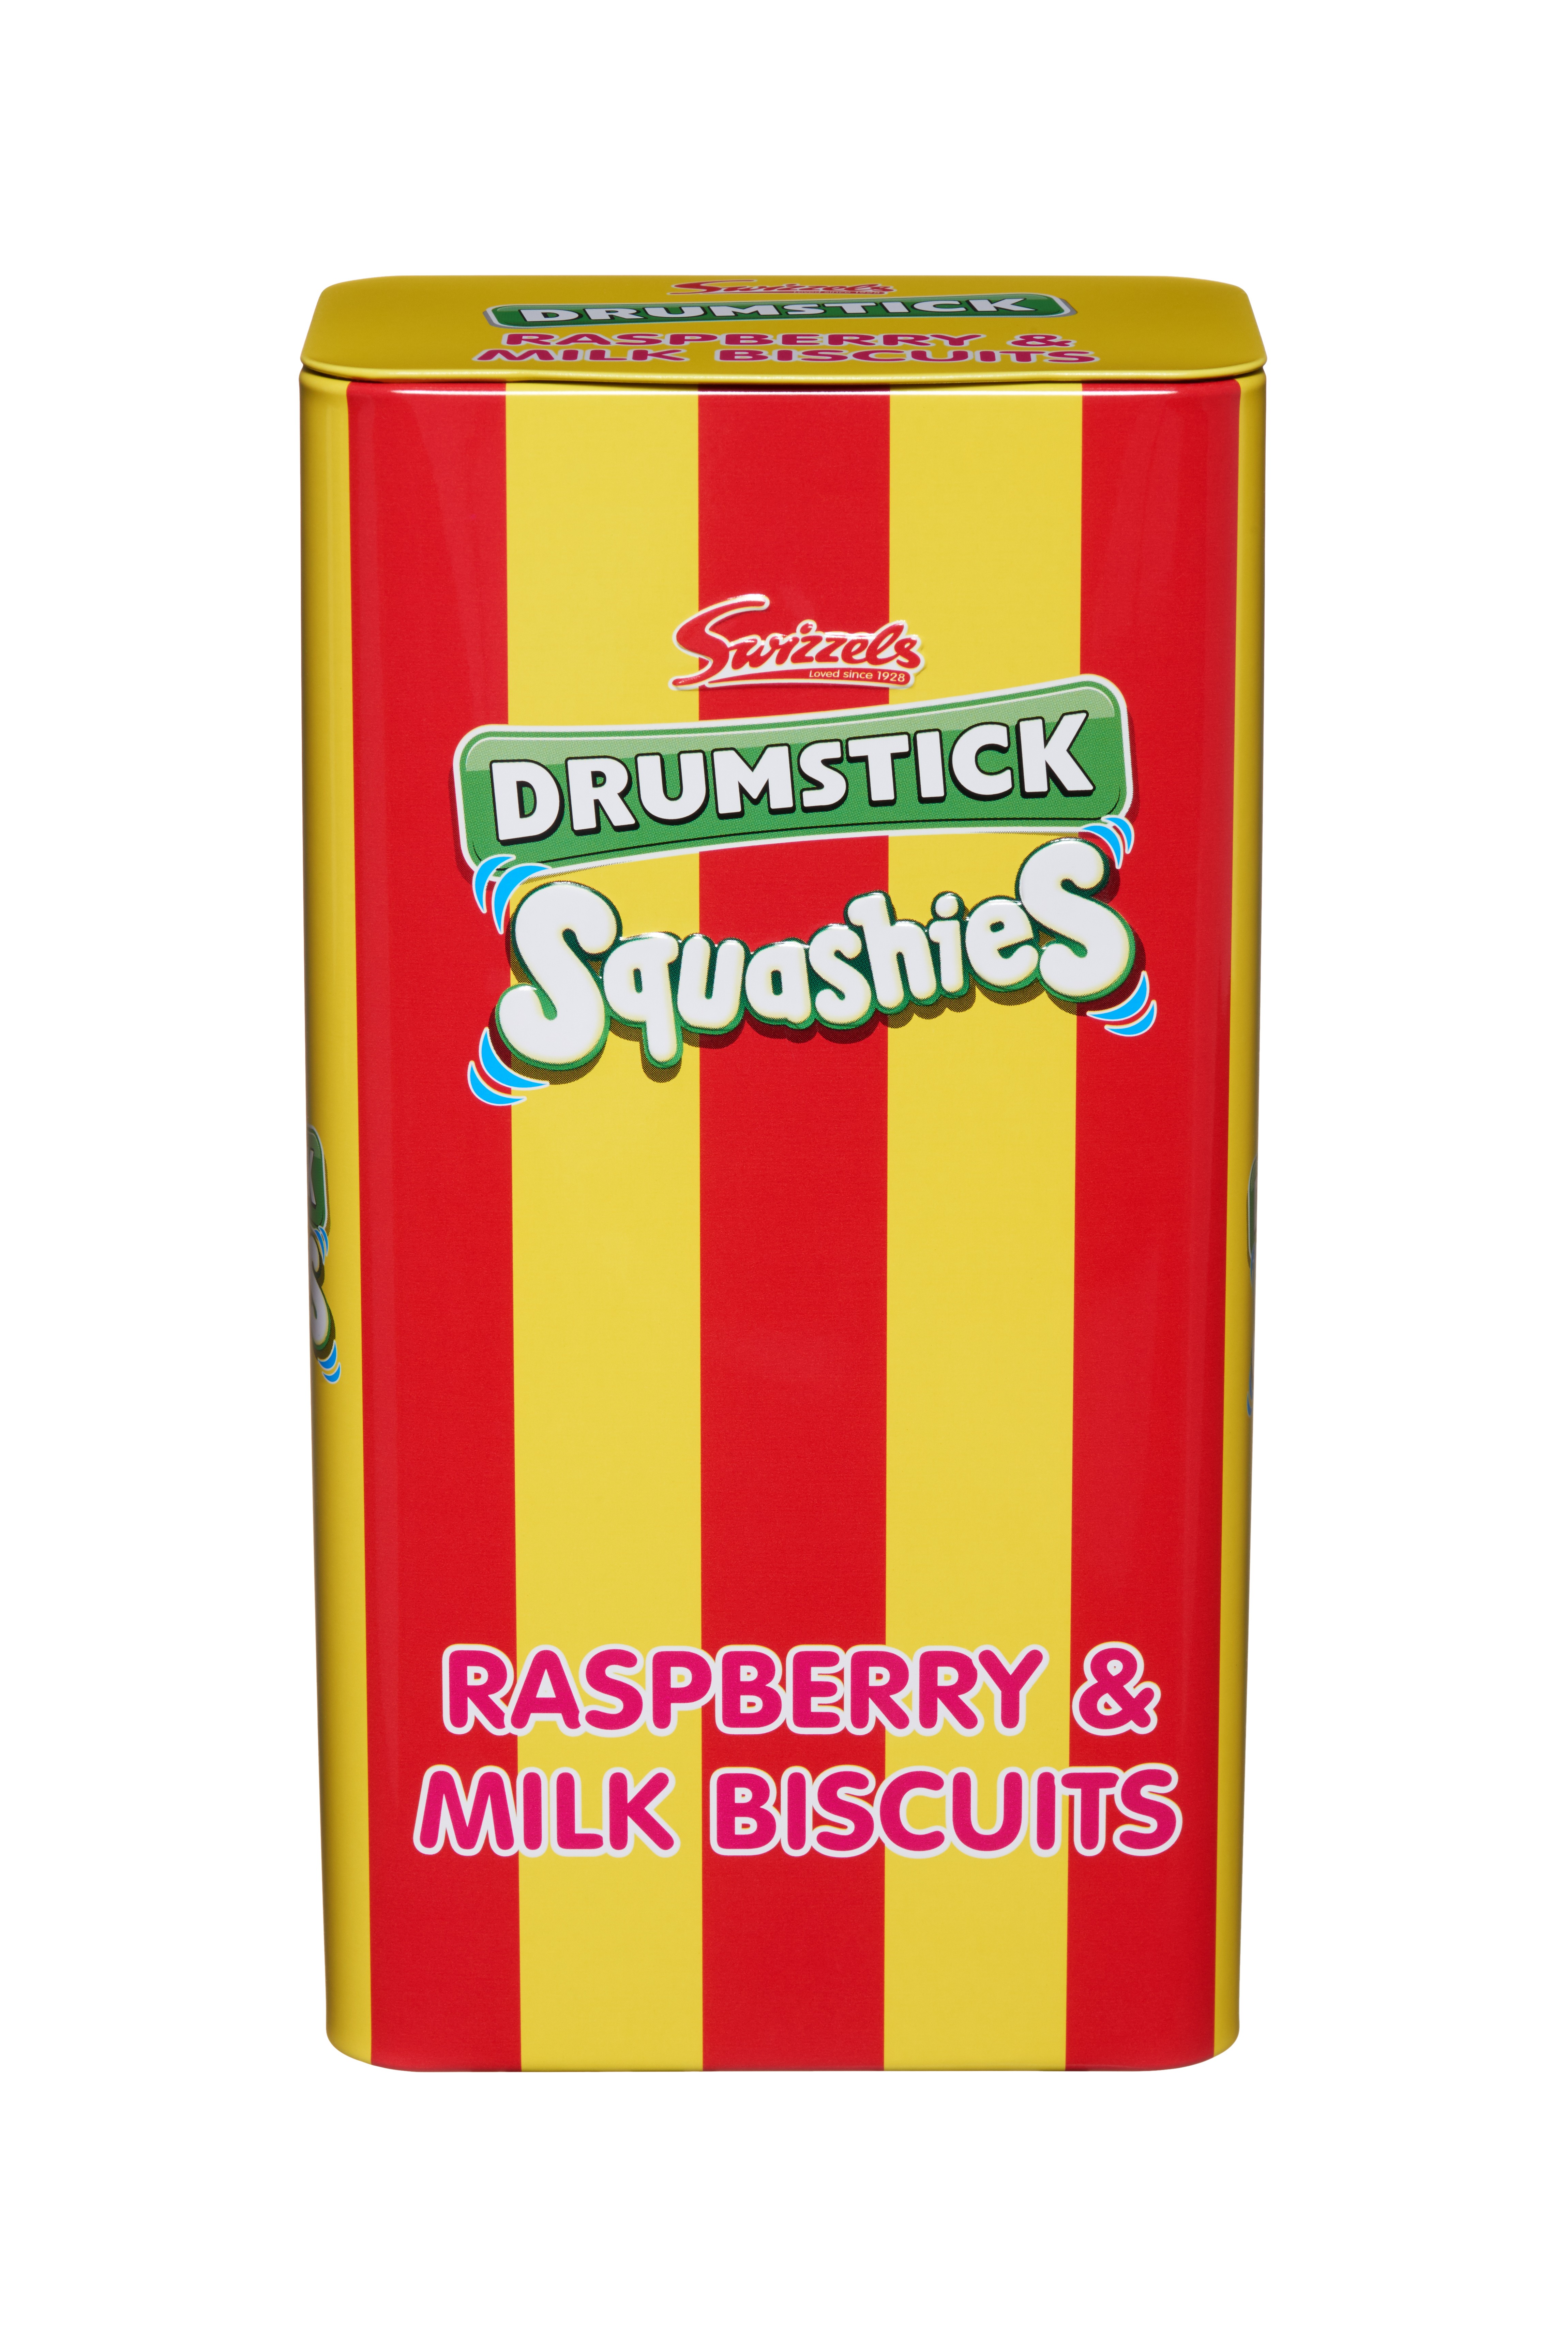 DRUMSTICK SQUASHIES RASPBERRY & MILK BISCUITS (SWIZZELS) 130G